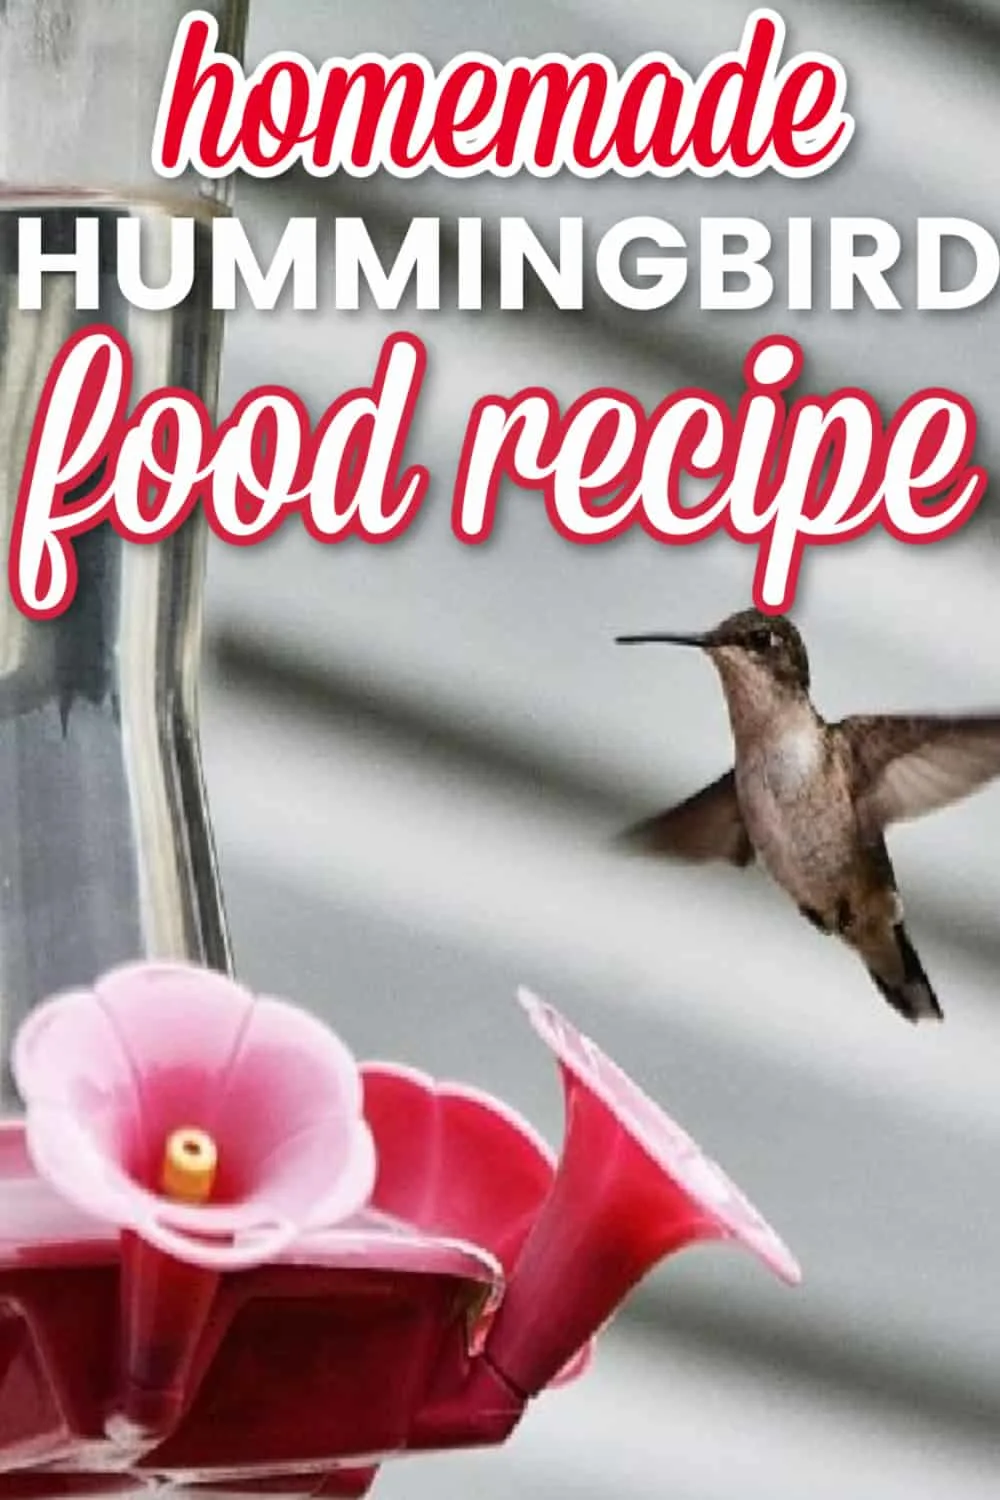 Homemade hummingbird food recipe - Pinterest image